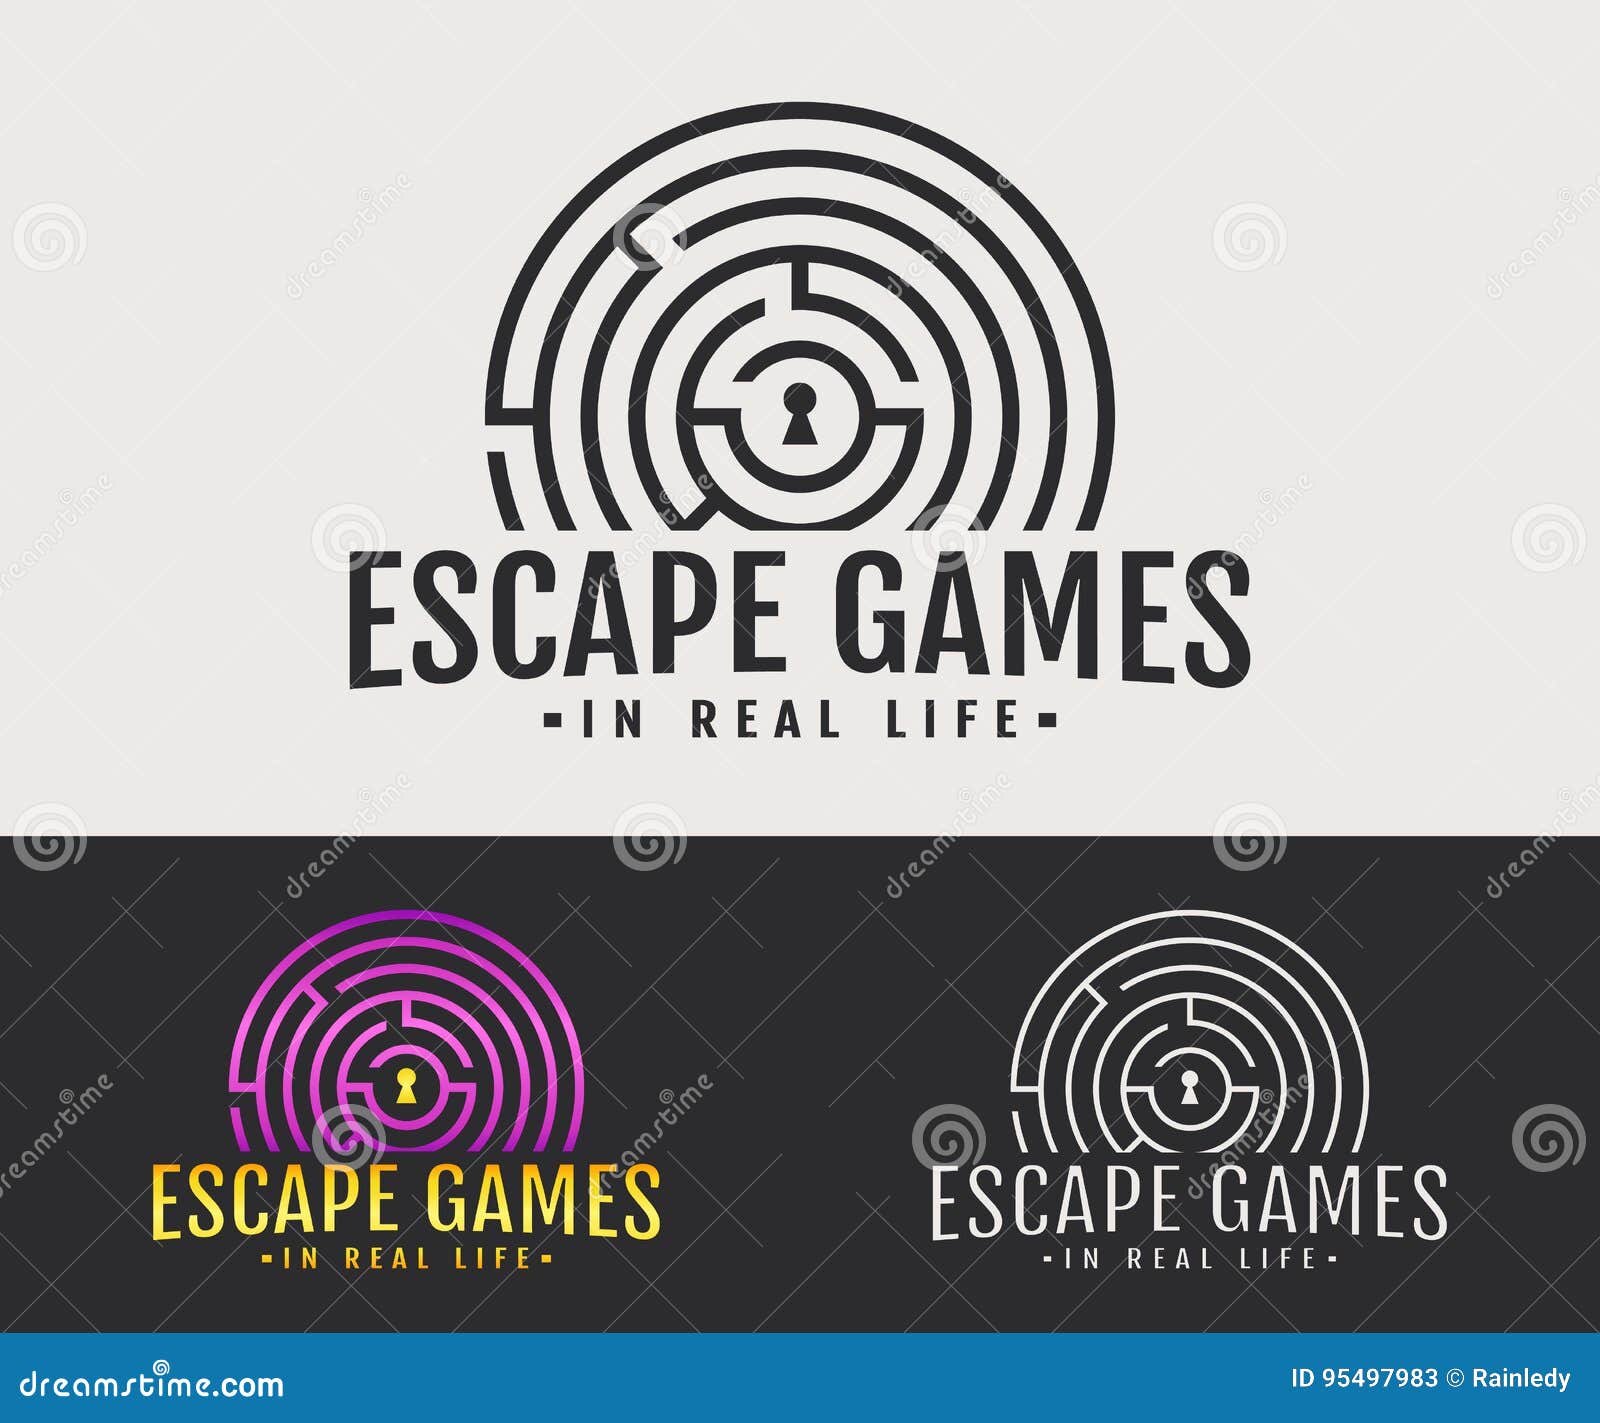 real-life escape games logo.